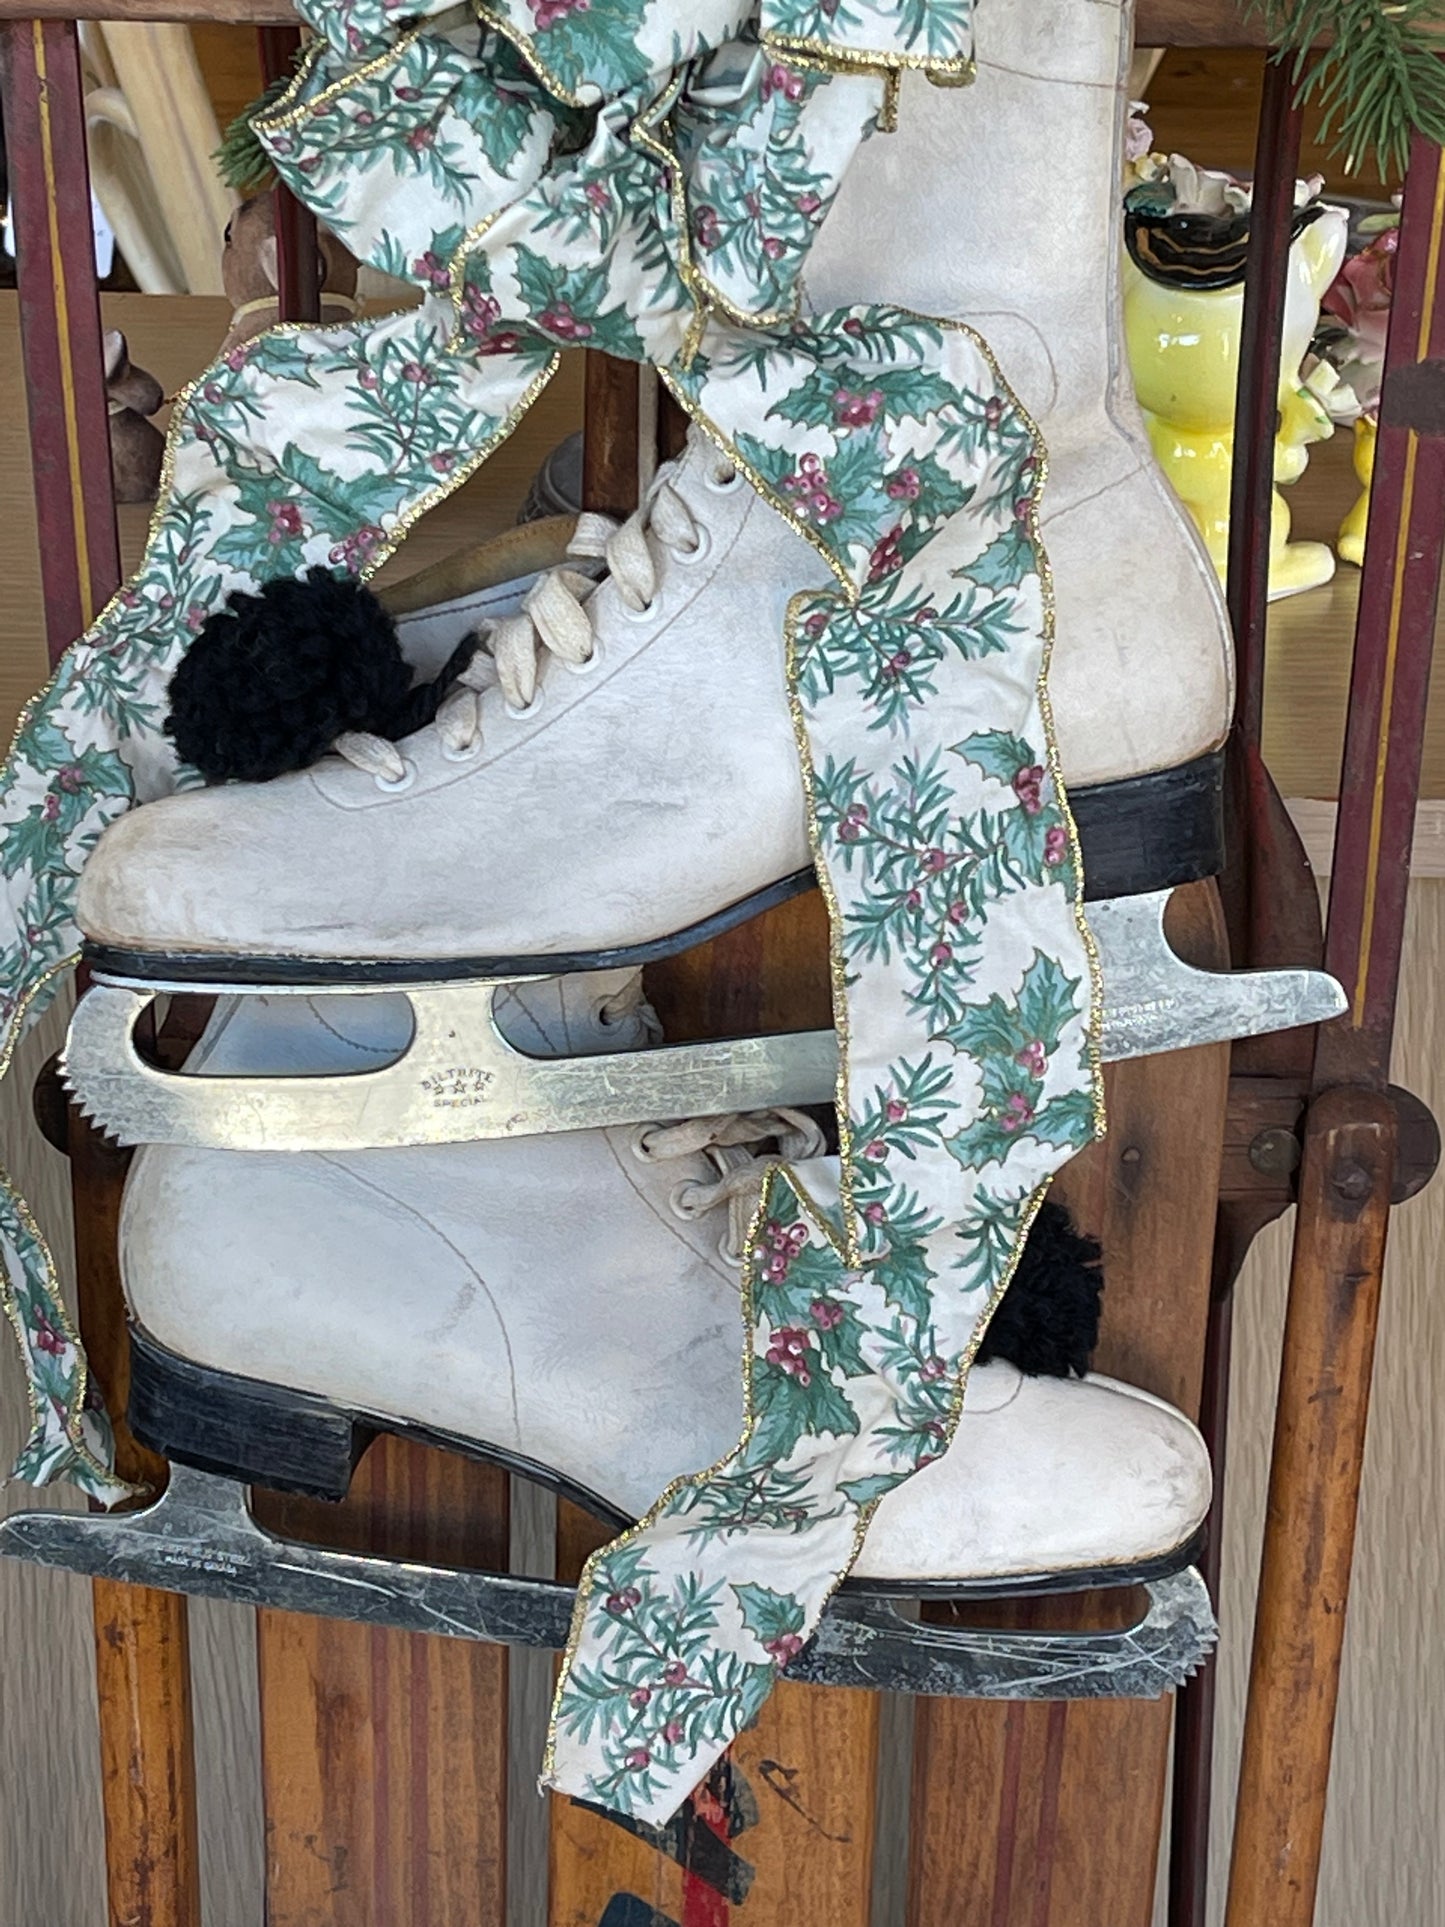 Vintage Sled & Ice Skate Outdoor Decor